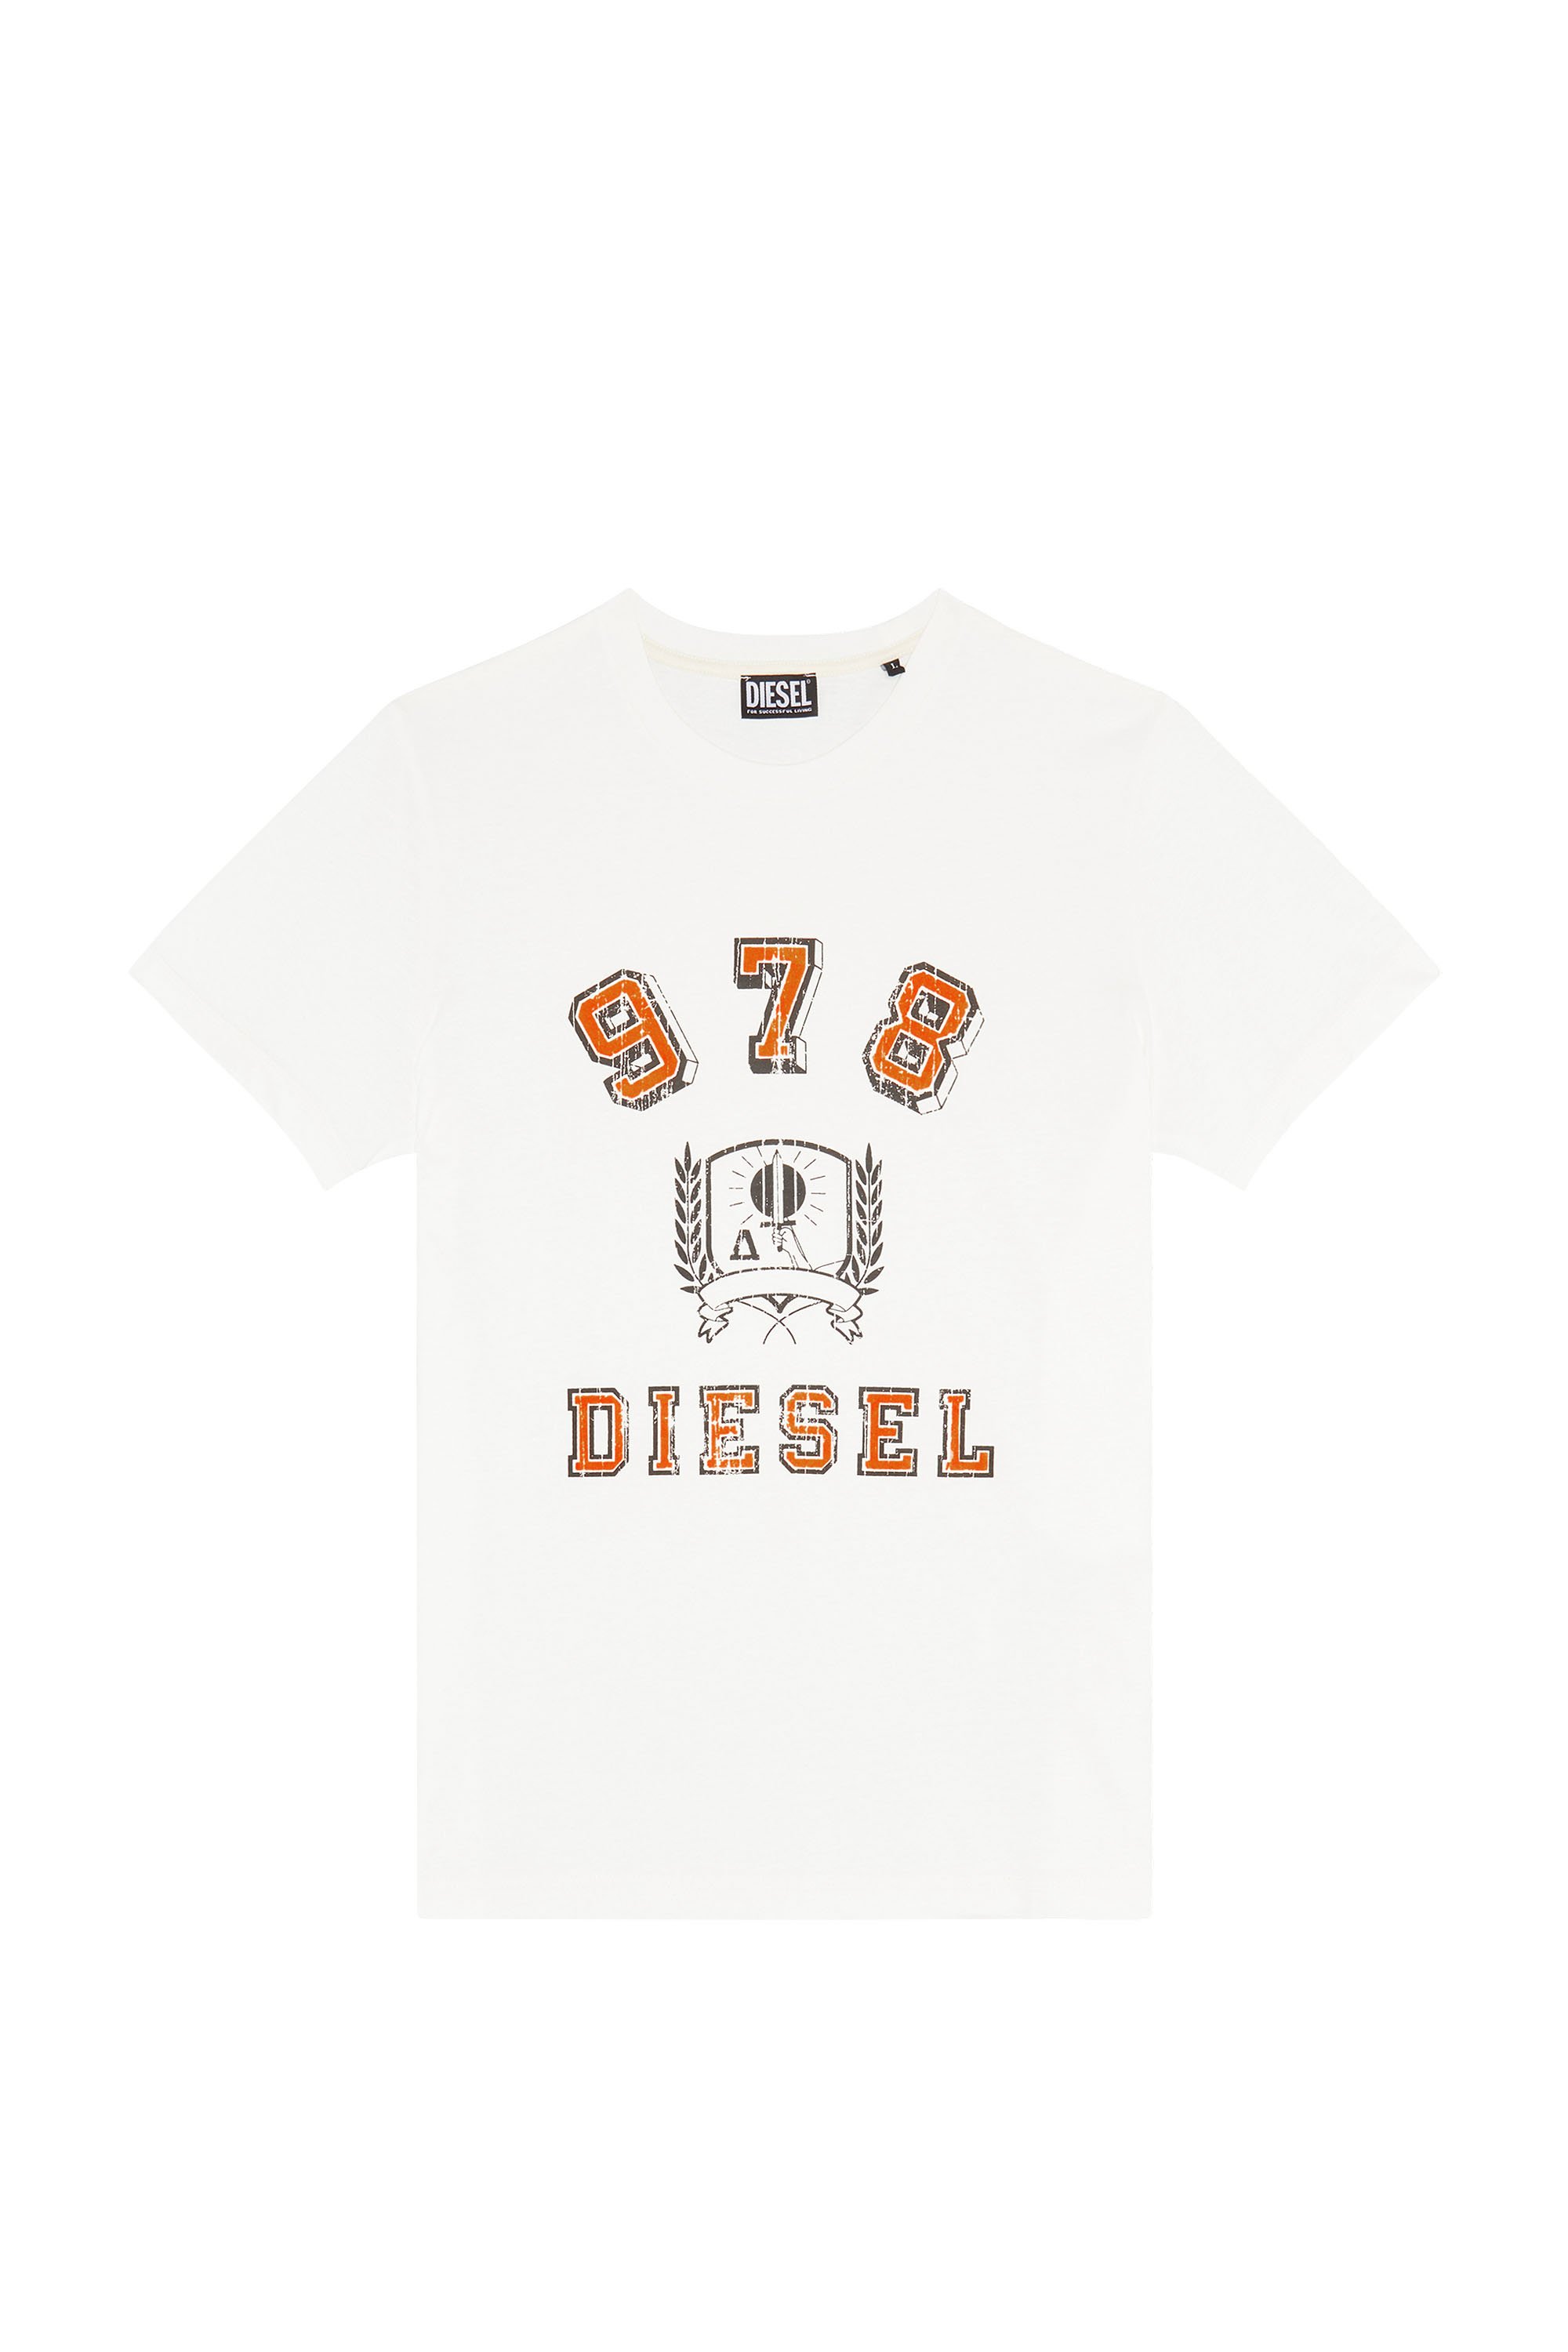 Diesel - T-DIEGOR-E11, Bianco - Image 1